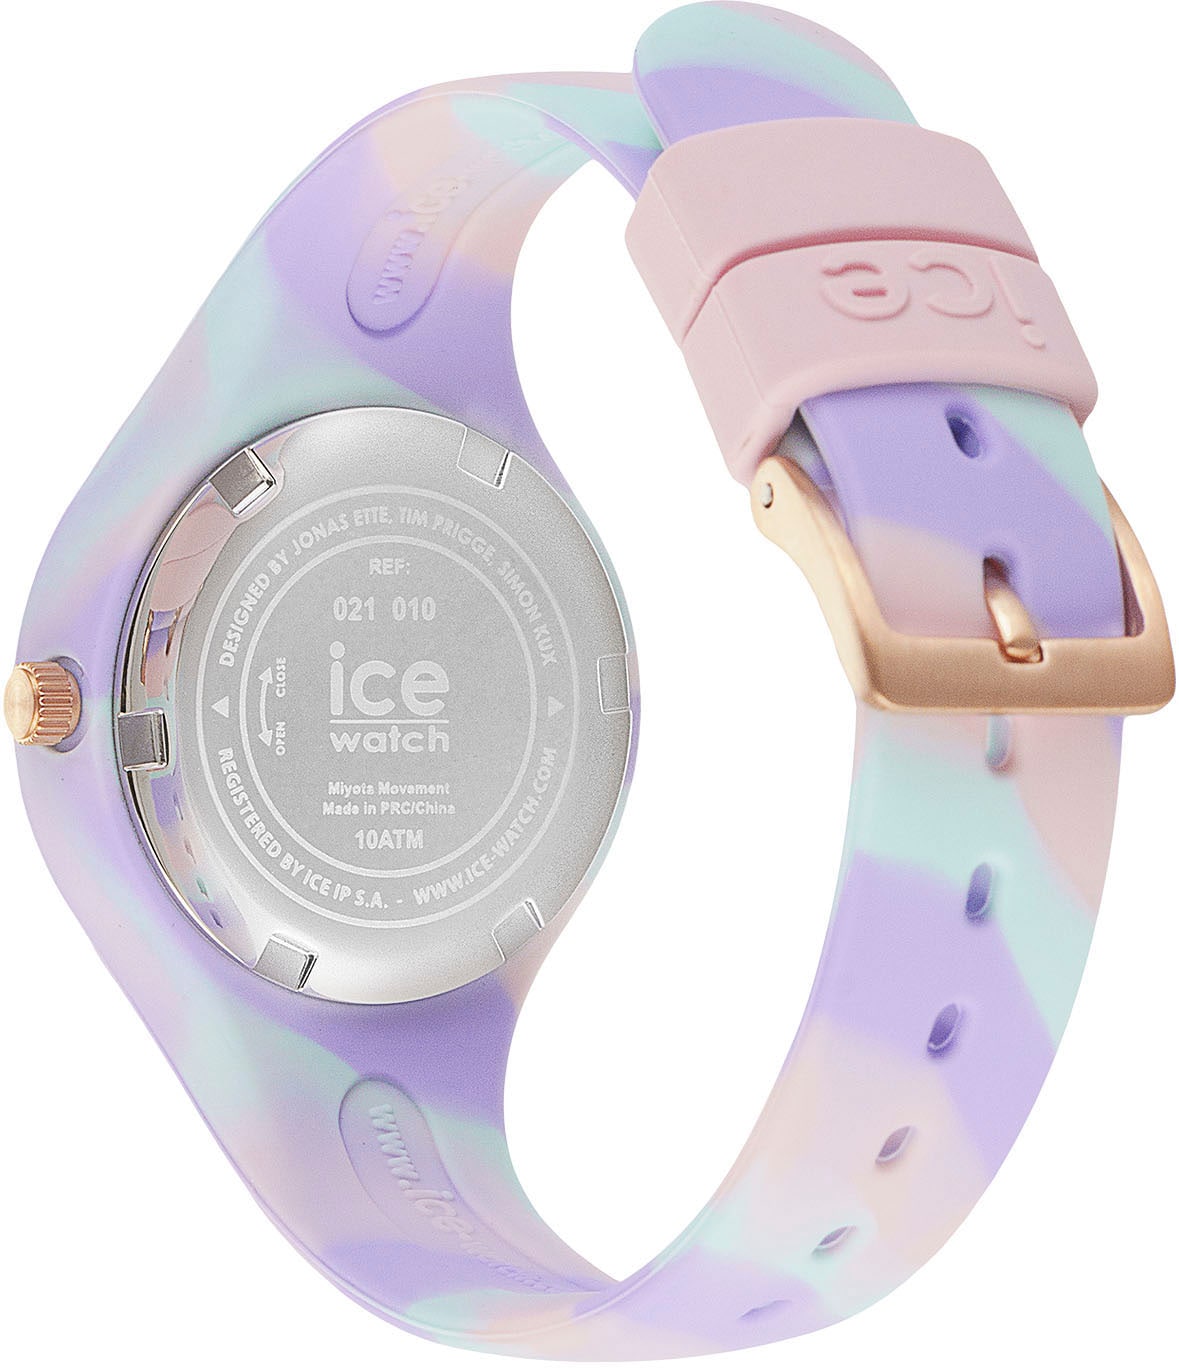 Sweet tie - Extra-Small lilac 3H, 021010«, - OTTO - ideal bei als »ICE and ice-watch online auch Geschenk dye Quarzuhr